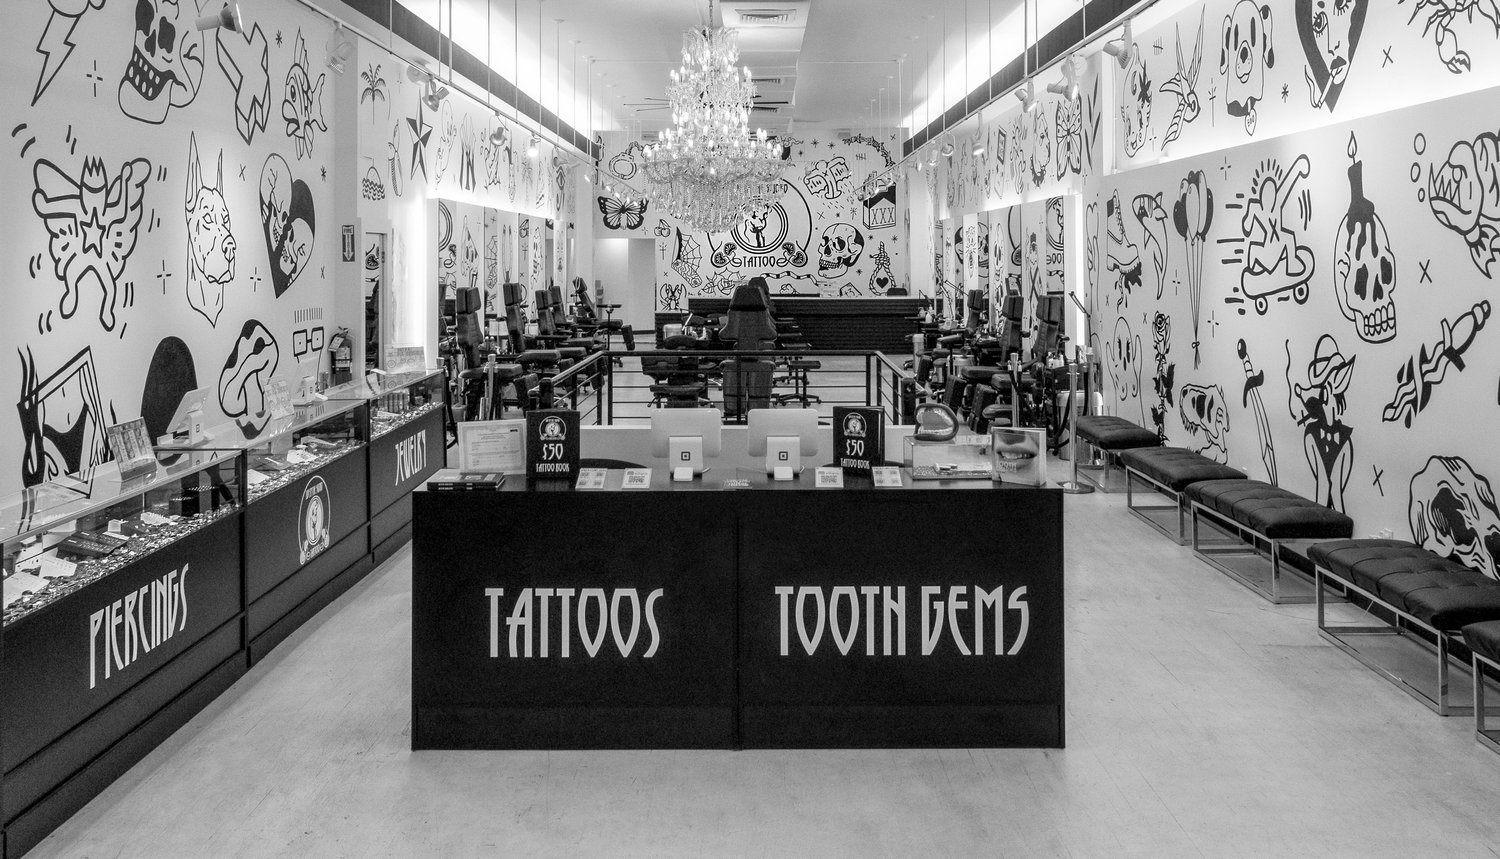 Walk In Tattoo & Piercing Locations - Williamsburg, Chelsea Market, SoHo